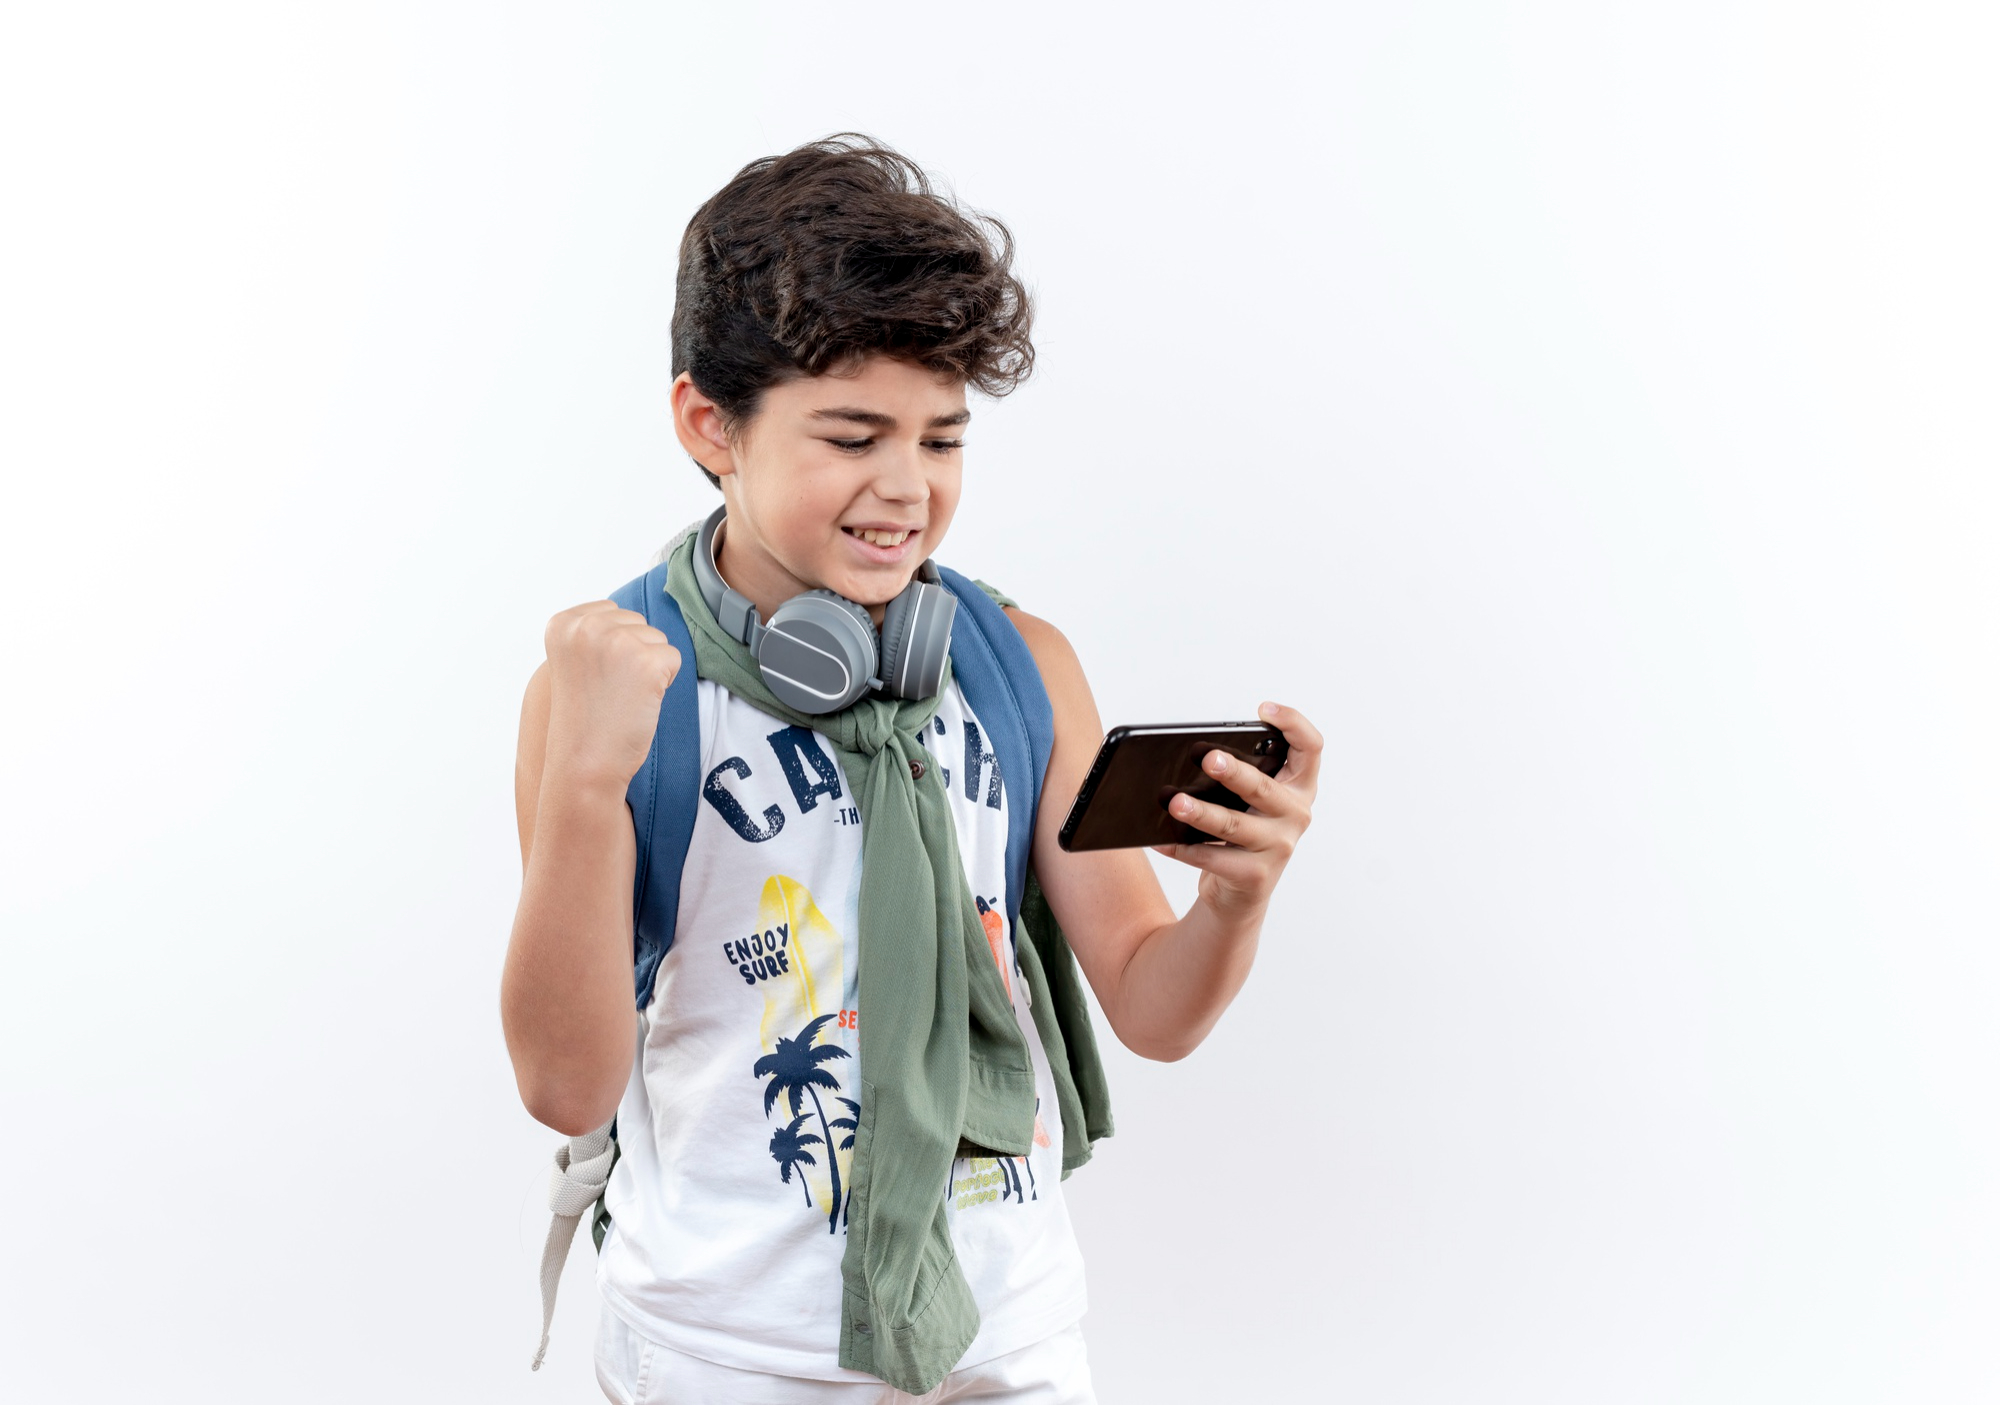 A happy teenage boy celebrating while looking at a phone | Source: Freepik